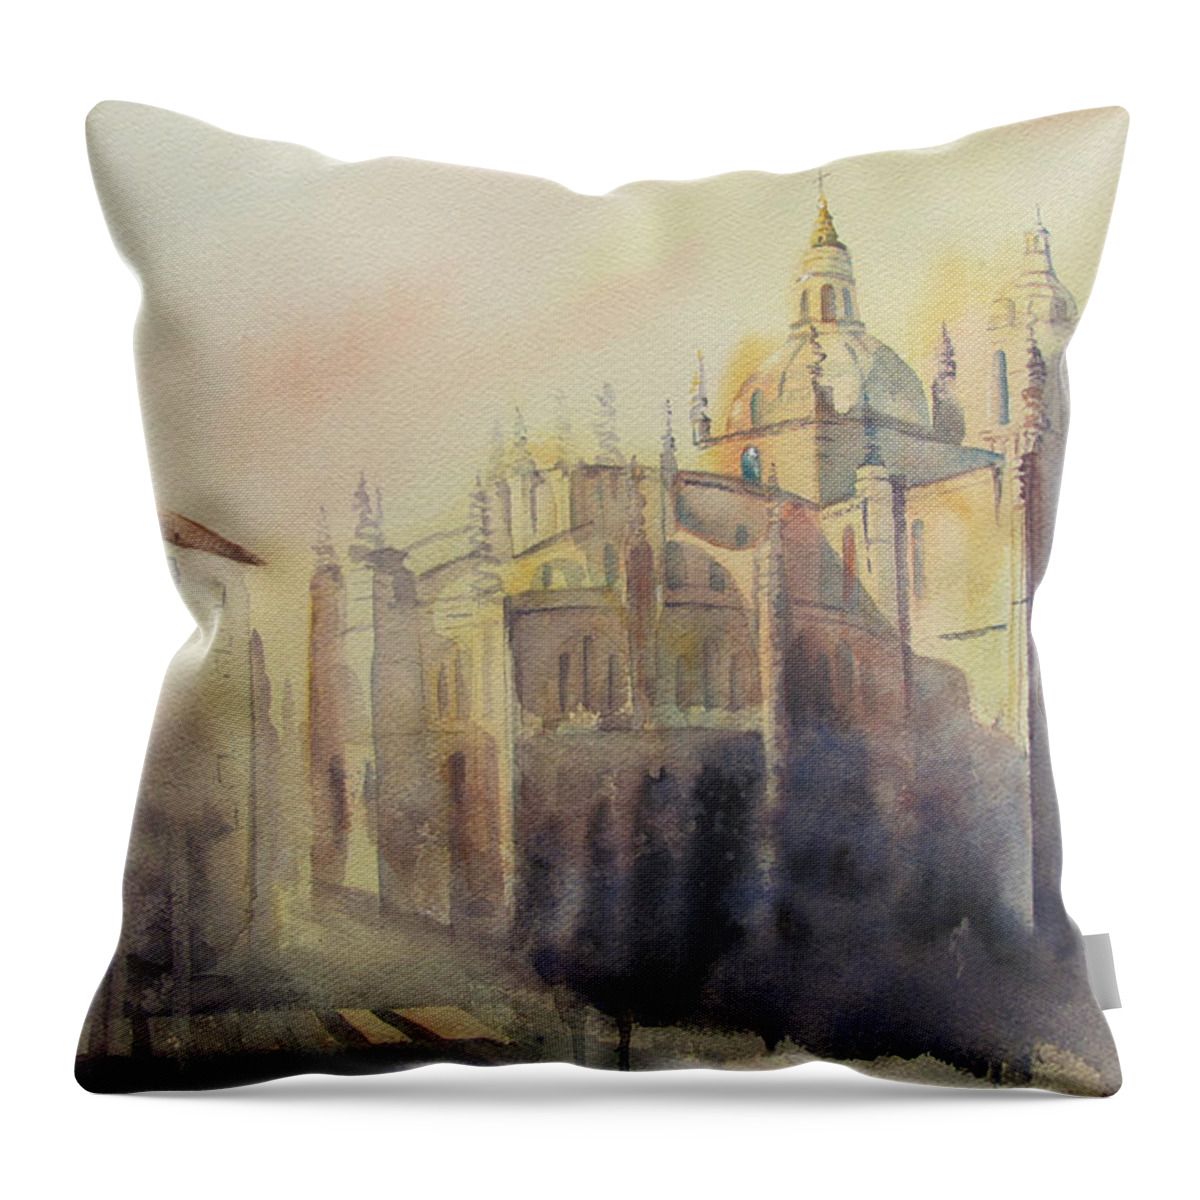 Segovia Throw Pillow featuring the painting Segovia Light by Amanda Amend